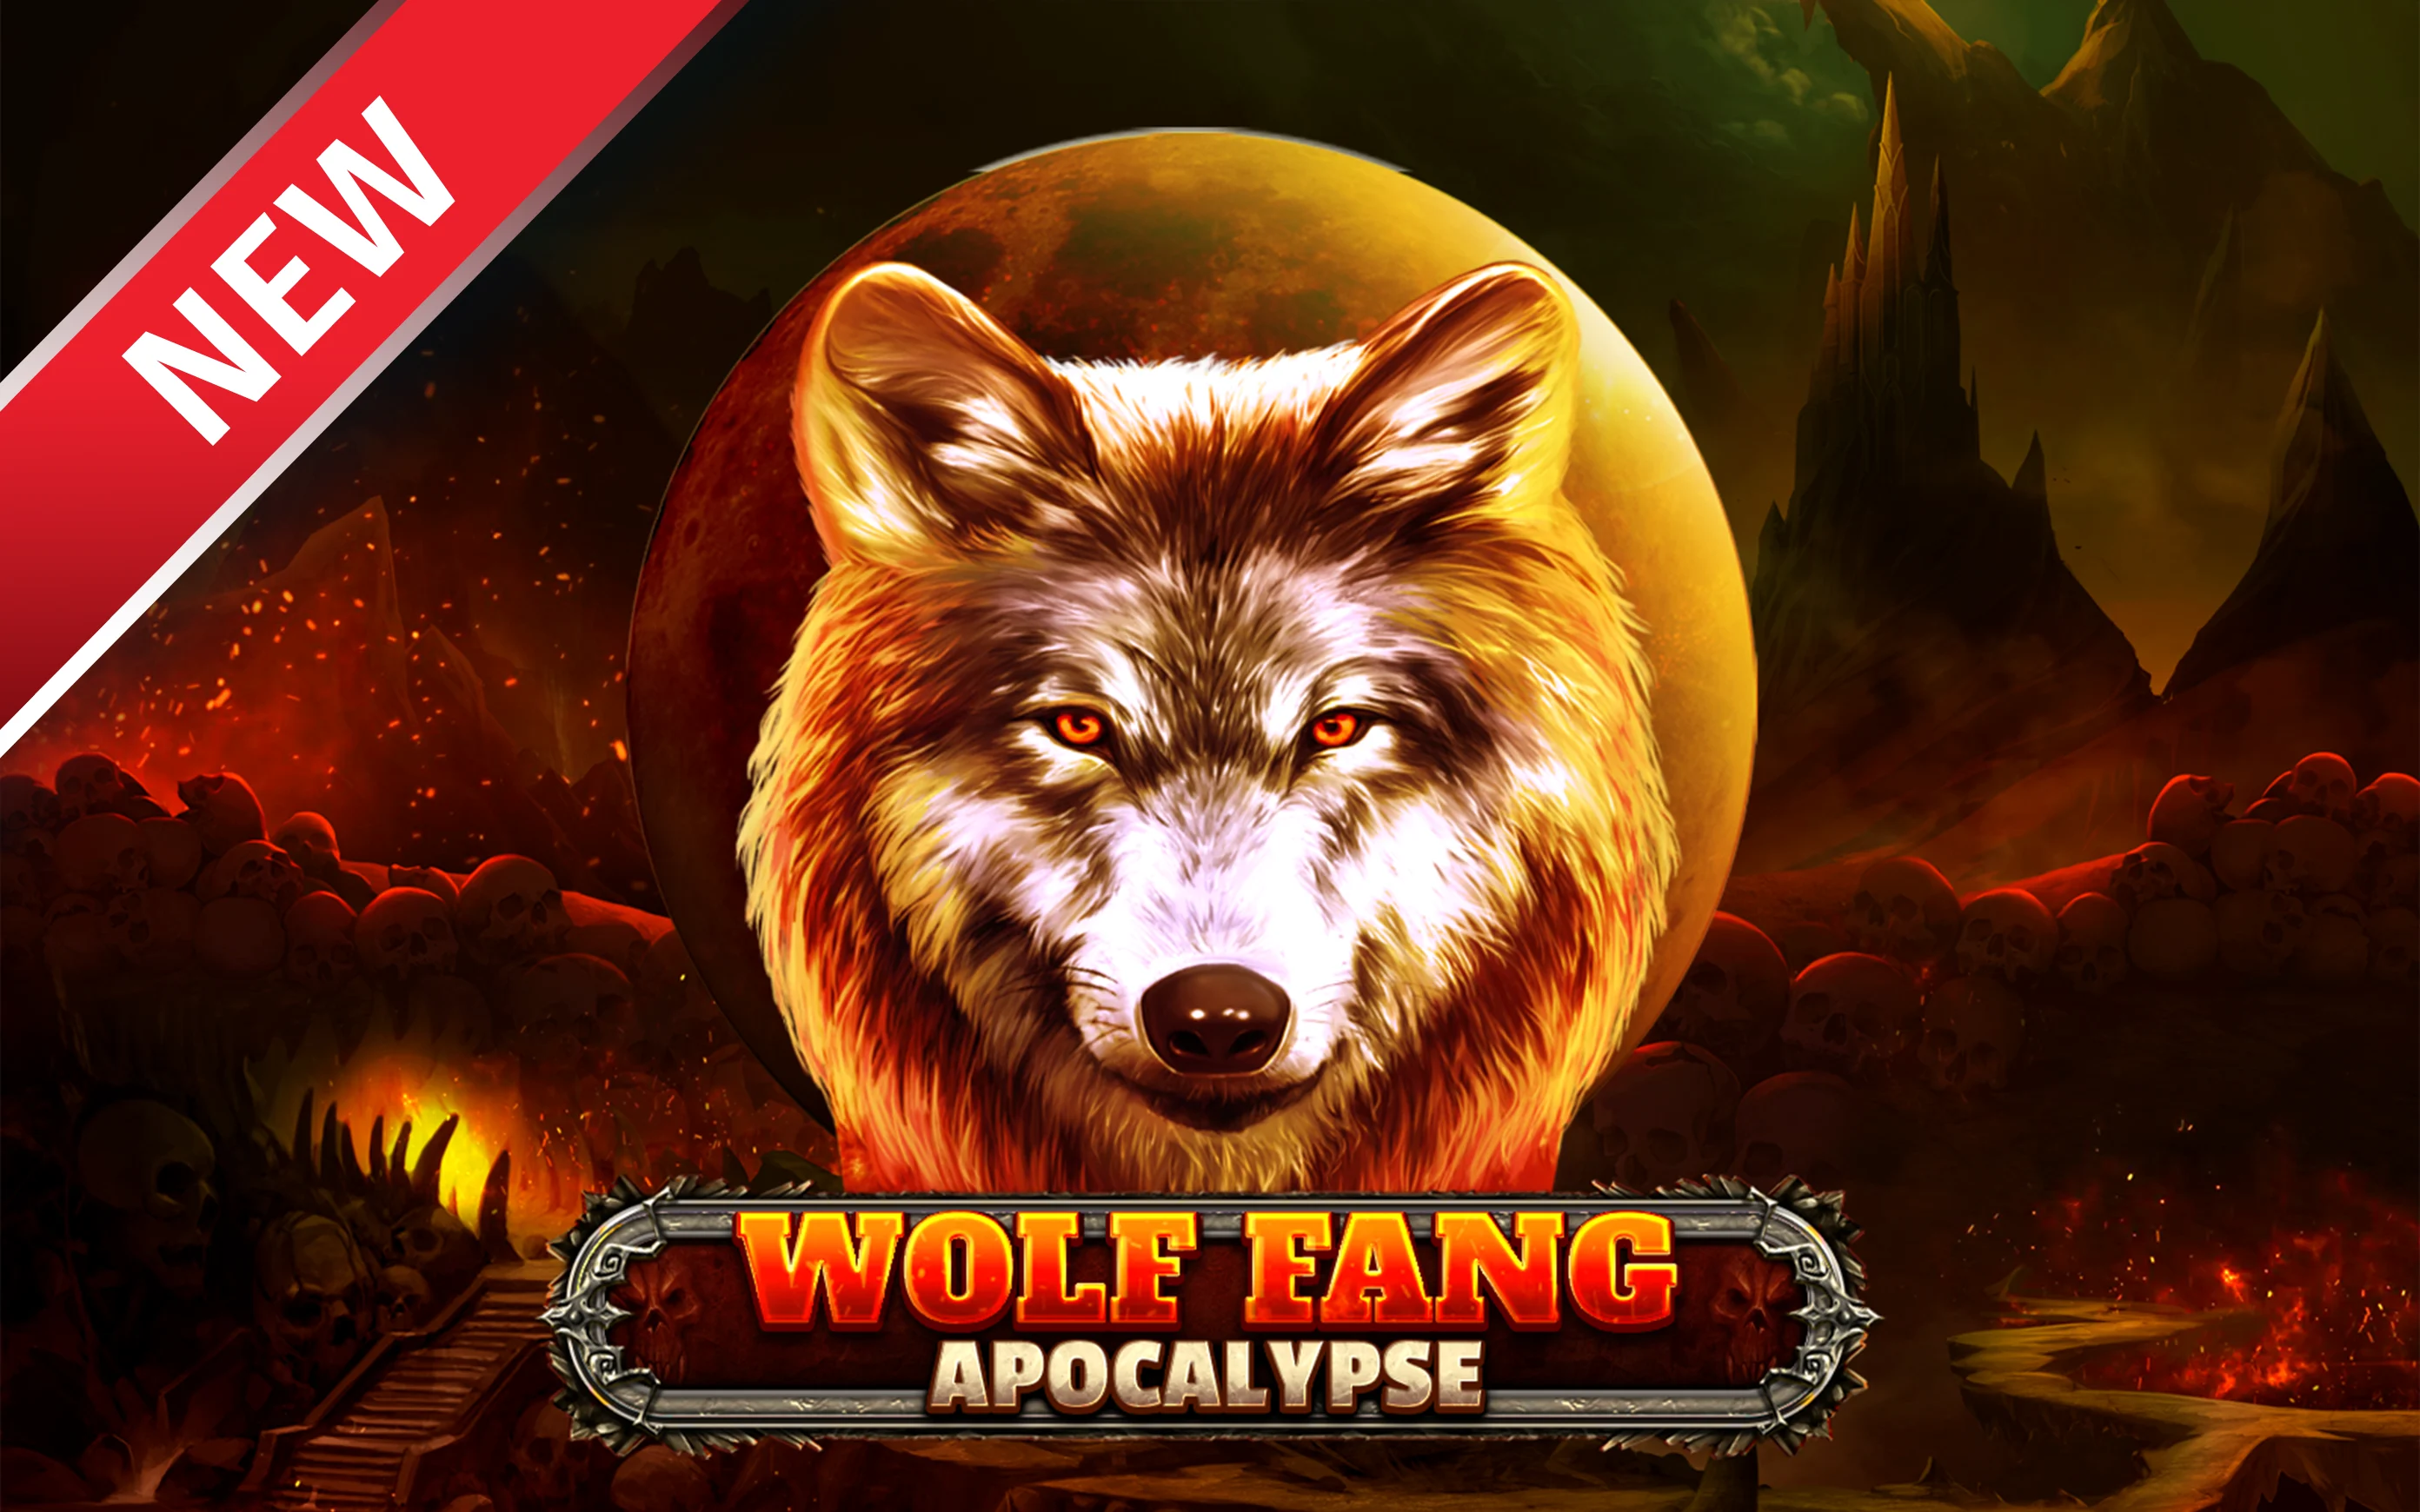 Play Wolf Fang – Apocalypse on Starcasino.be online casino